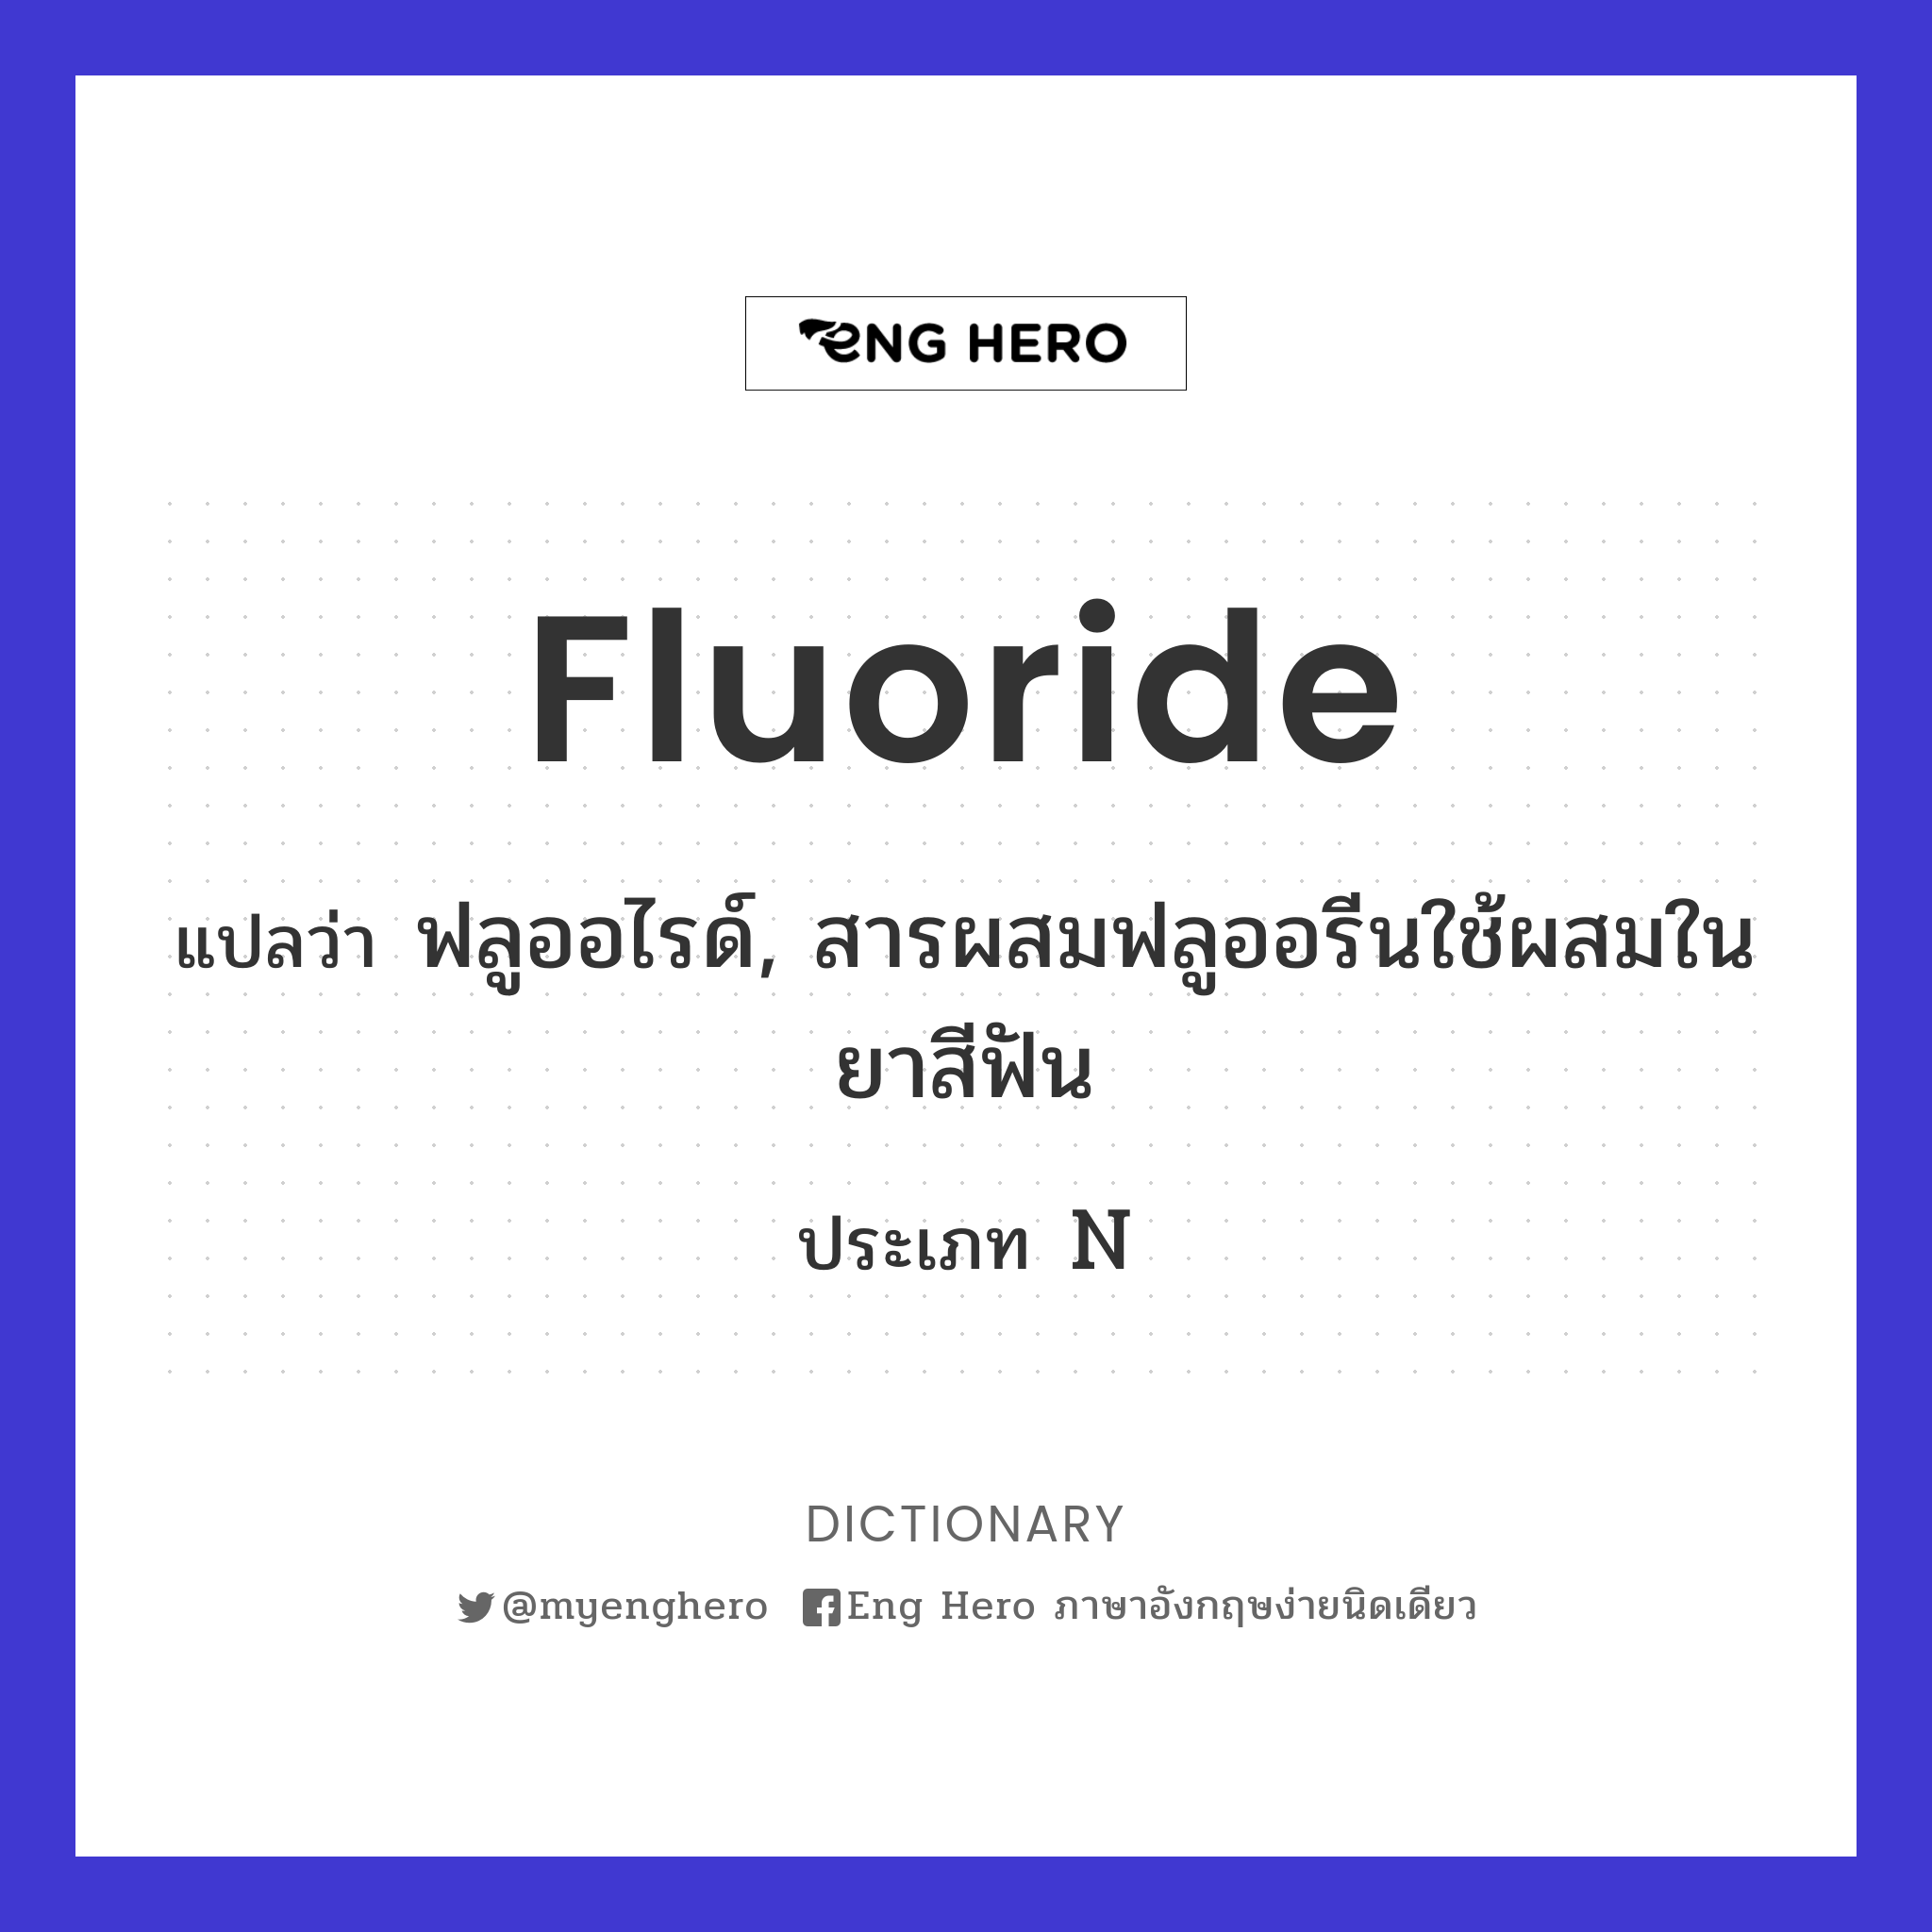 fluoride